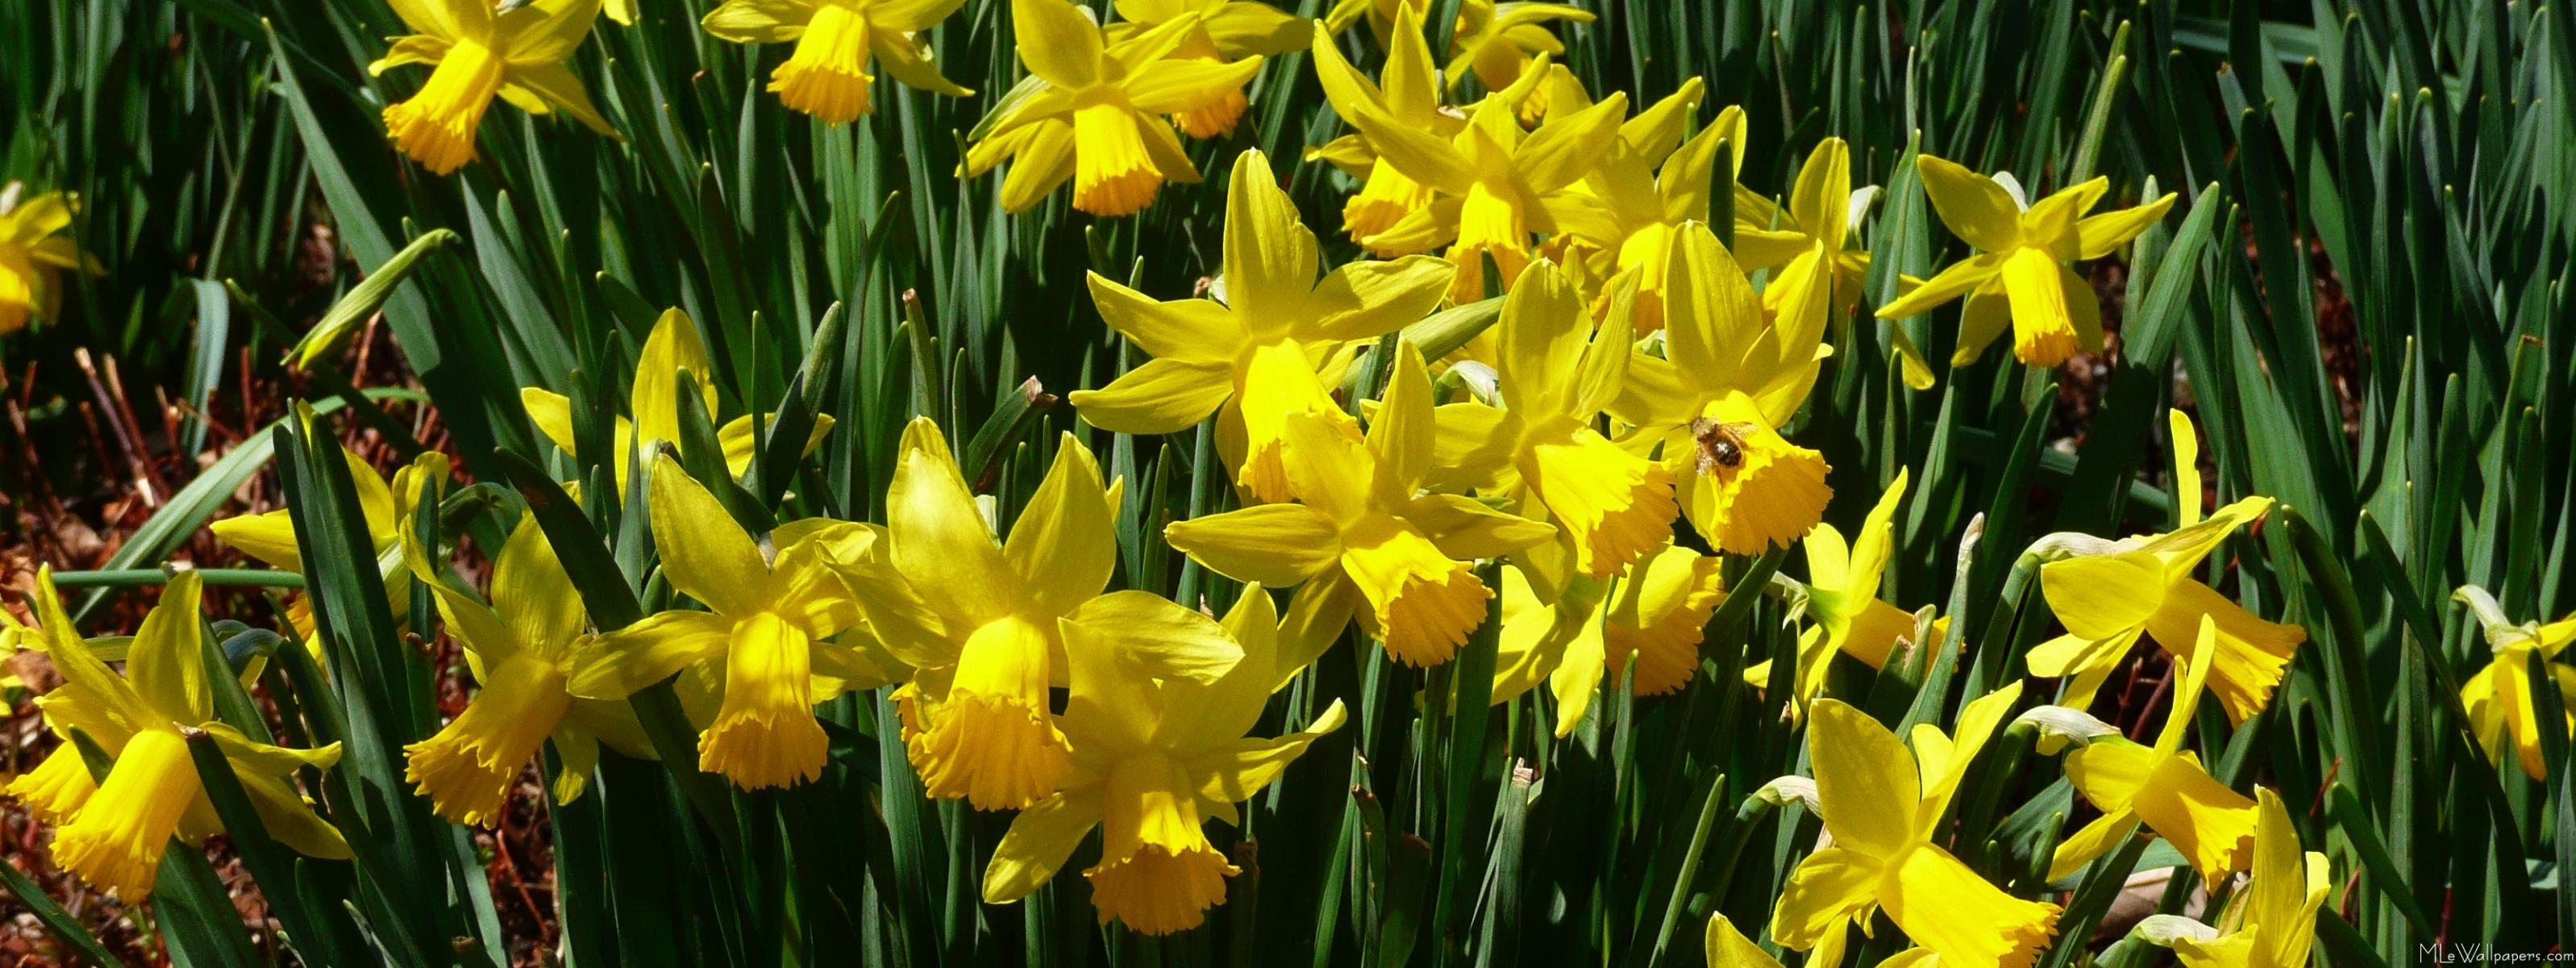 Yellow Daffodils Wallpaper I